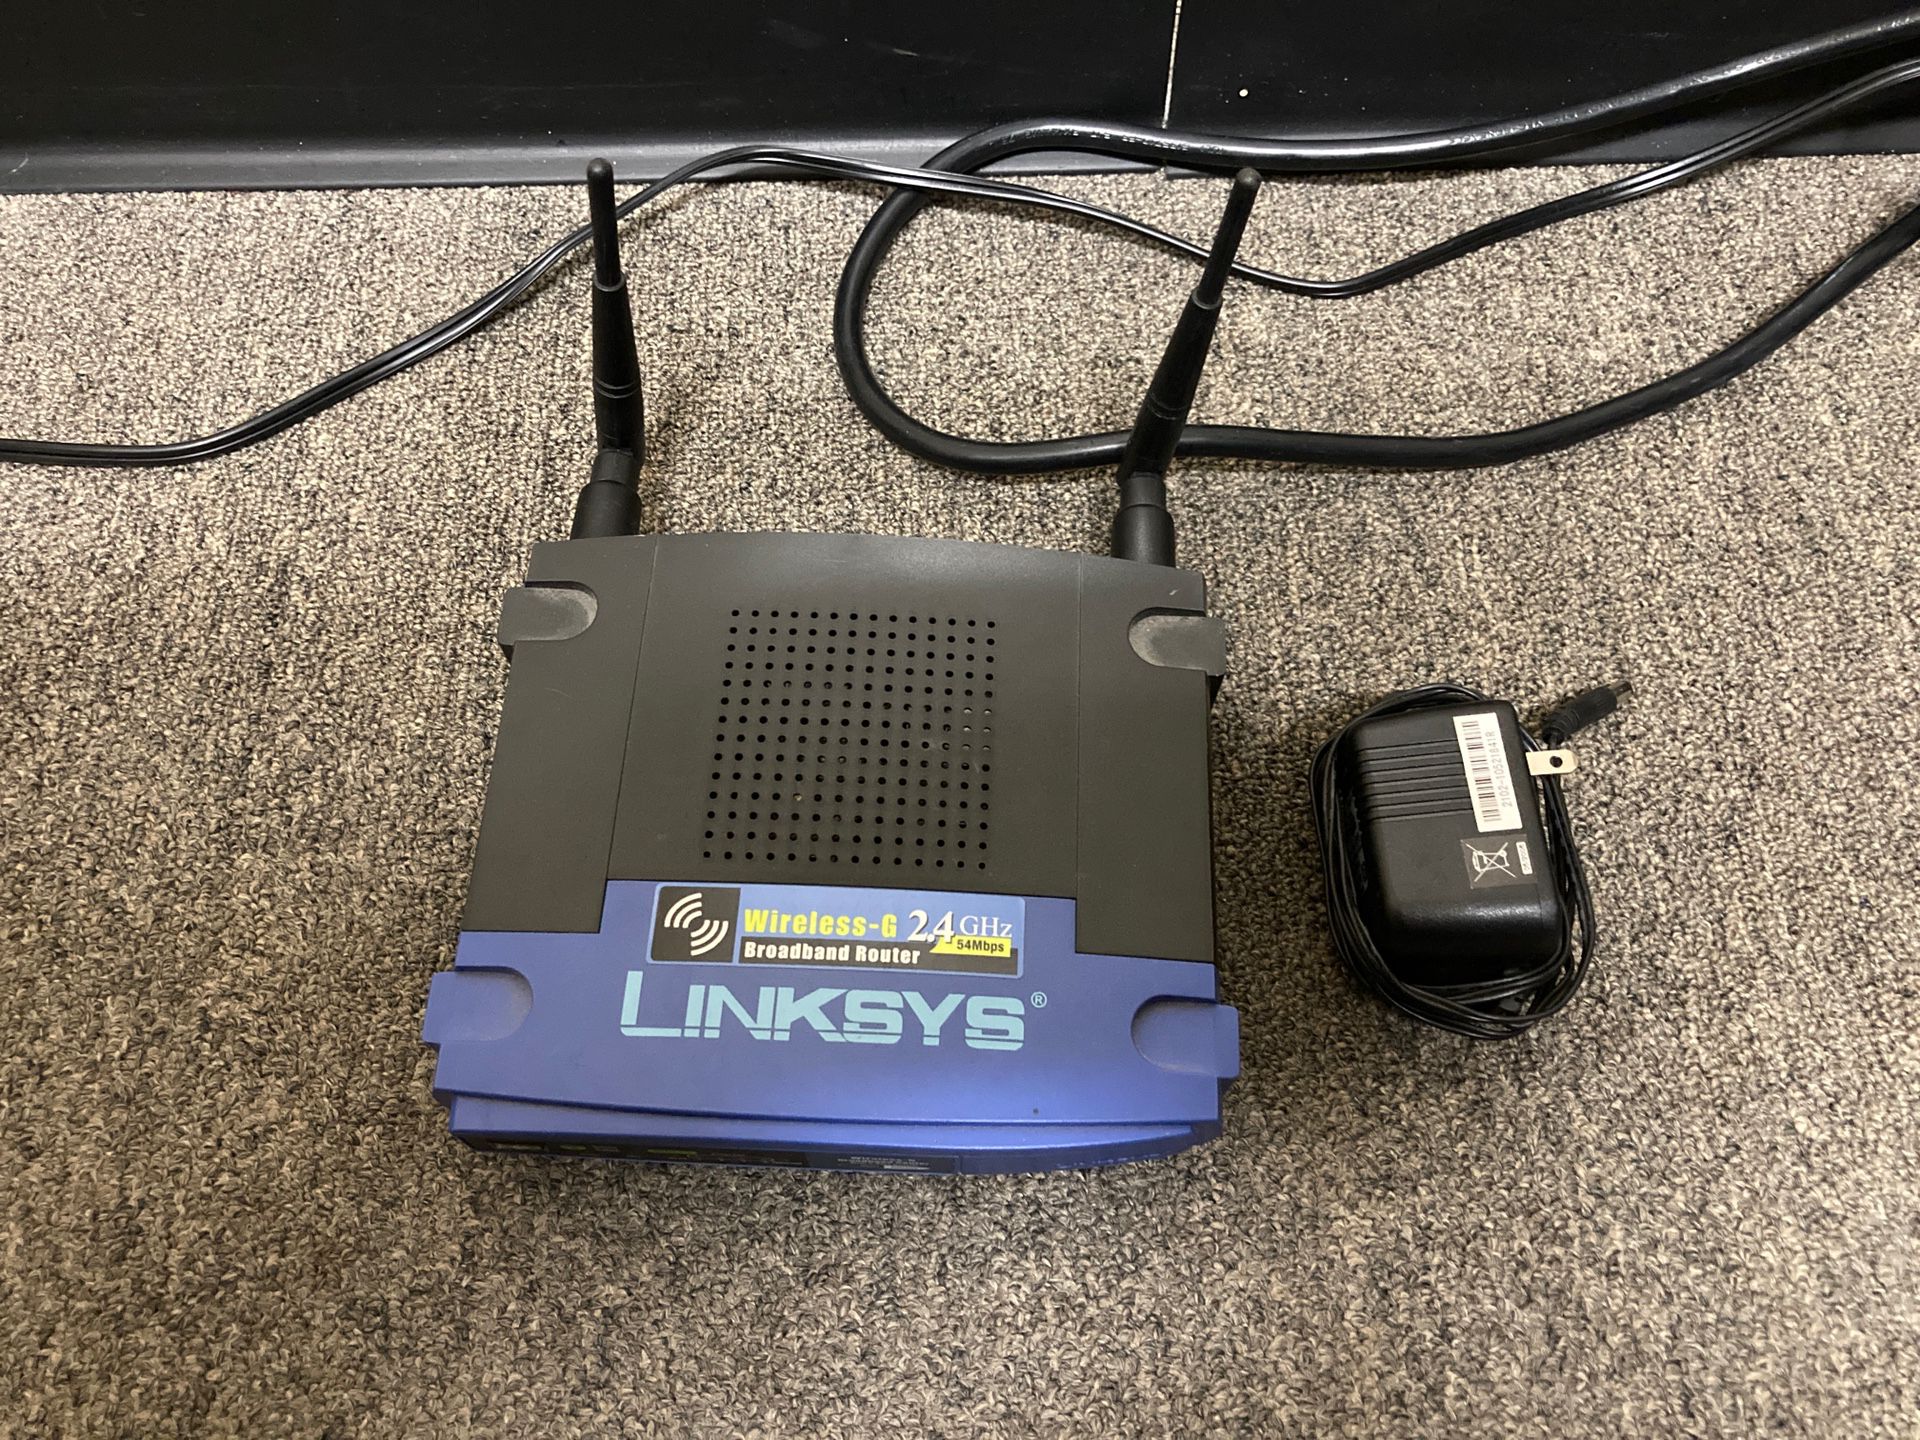 Linksys Wireless Router WRT54G